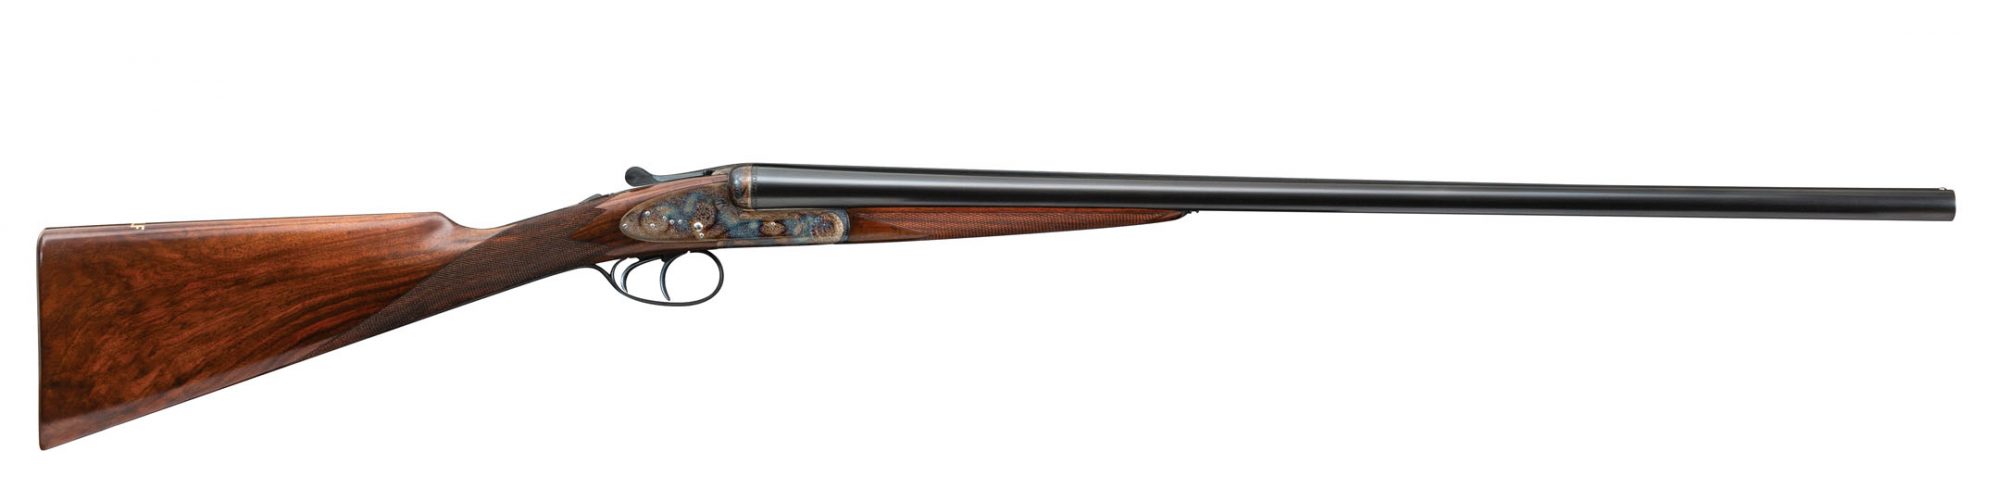 Gastinne Renette Belgian side-by-side shotgun, after restoration work by Turnbull Restoration Co. of Bloomfield, NY